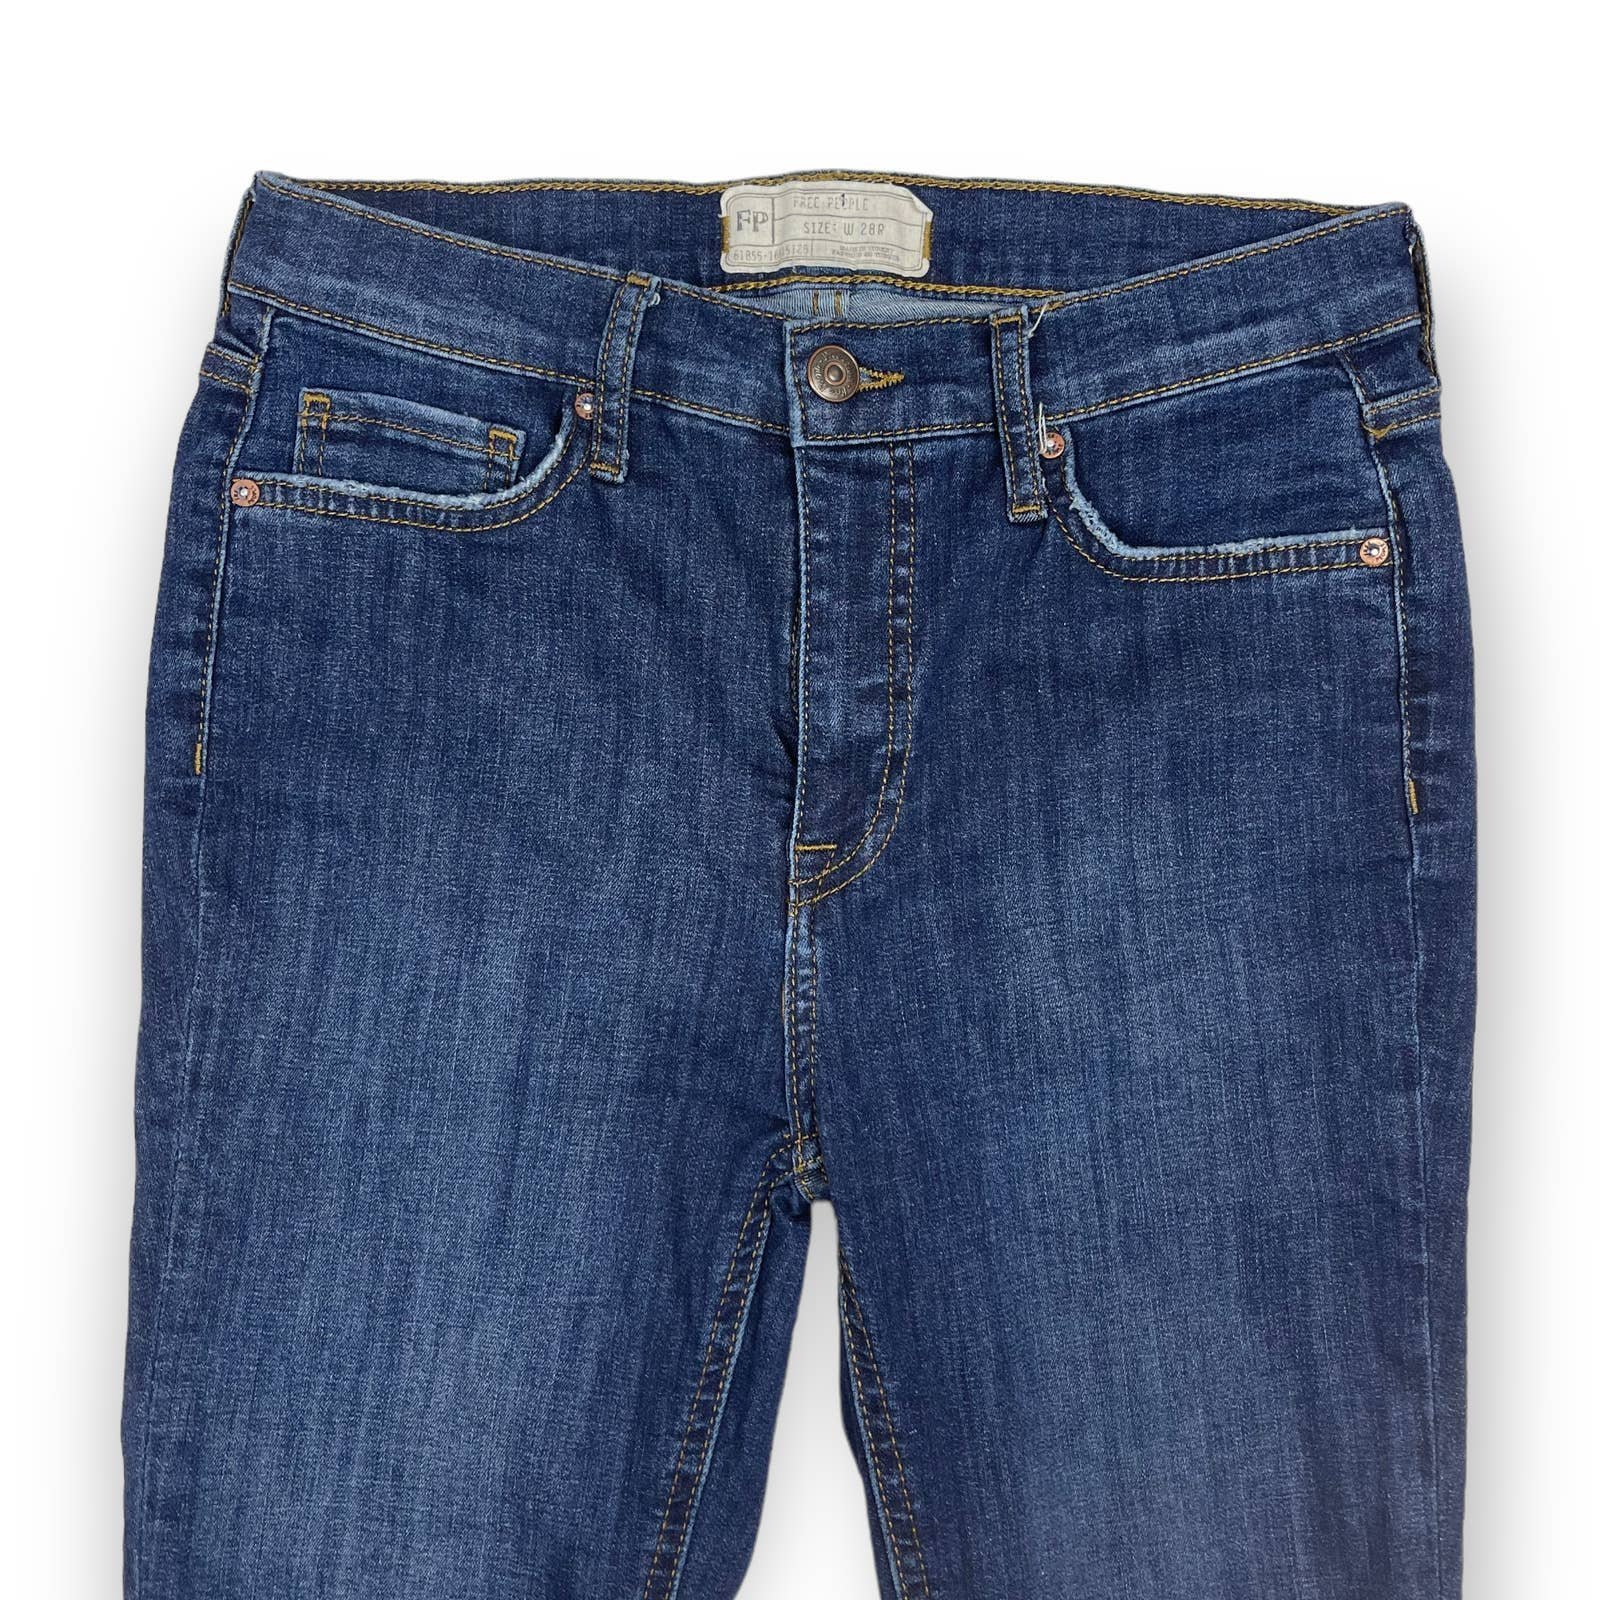 large discount Free People Skinny Jeans 28R onnrnWXM3 Wholesale